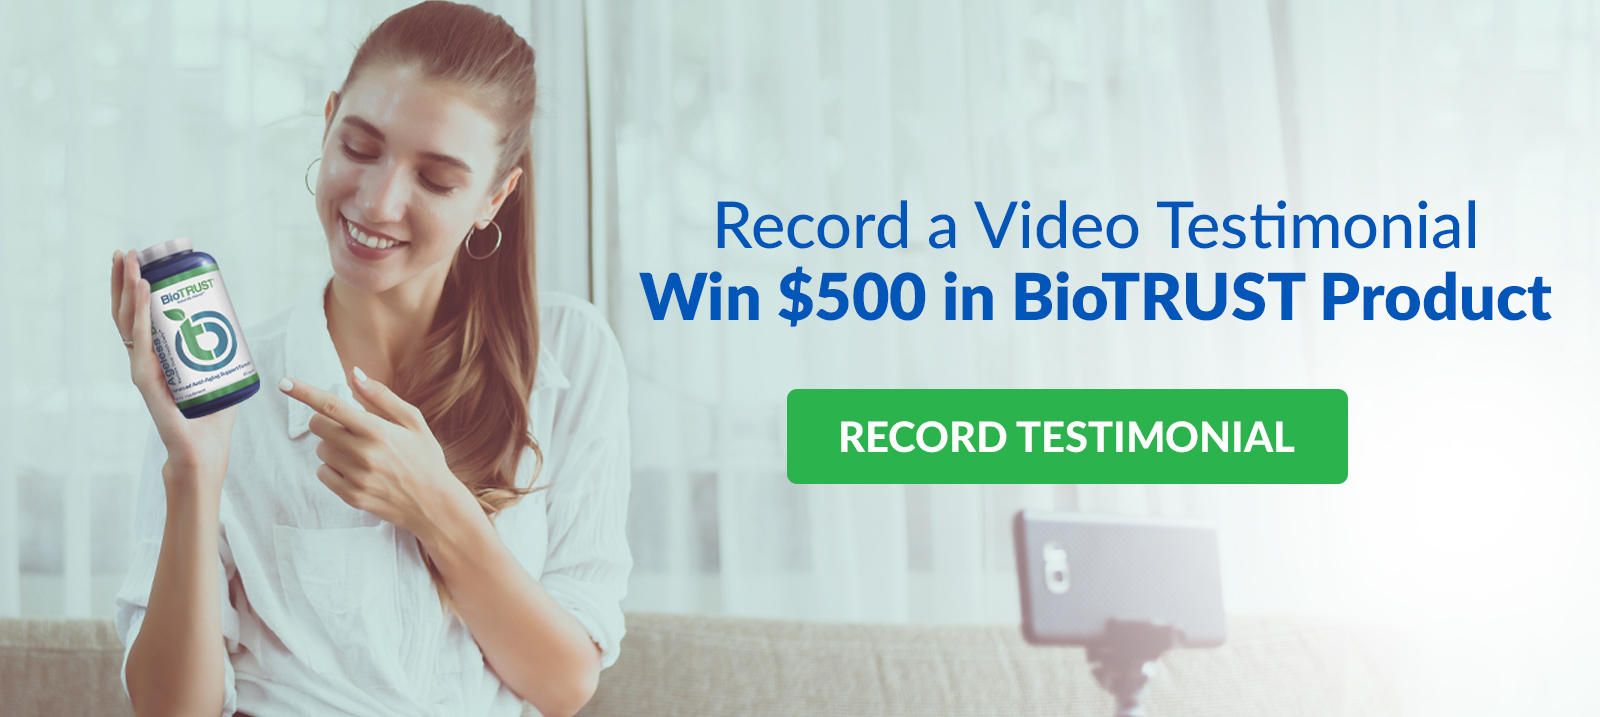 Record a Video Testimonial: Enter to Win $500